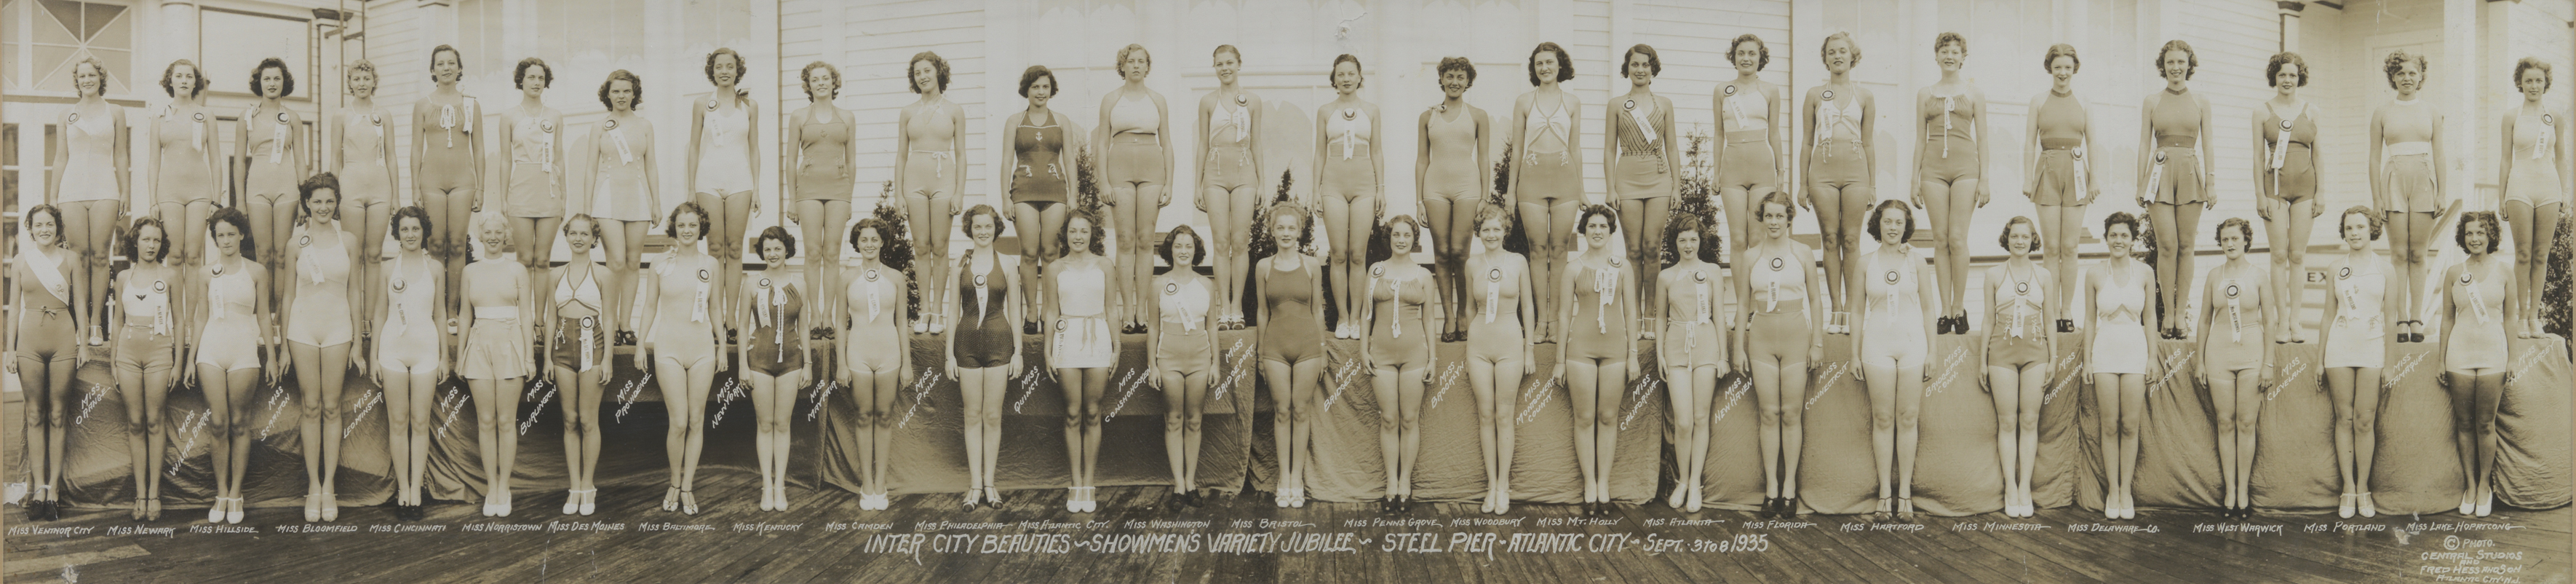 “Inter City Beauties - Showmen’s Variety Jubilee, 
                              Steel Pier, Atlantic City, Sept 2 to 8, 1935”